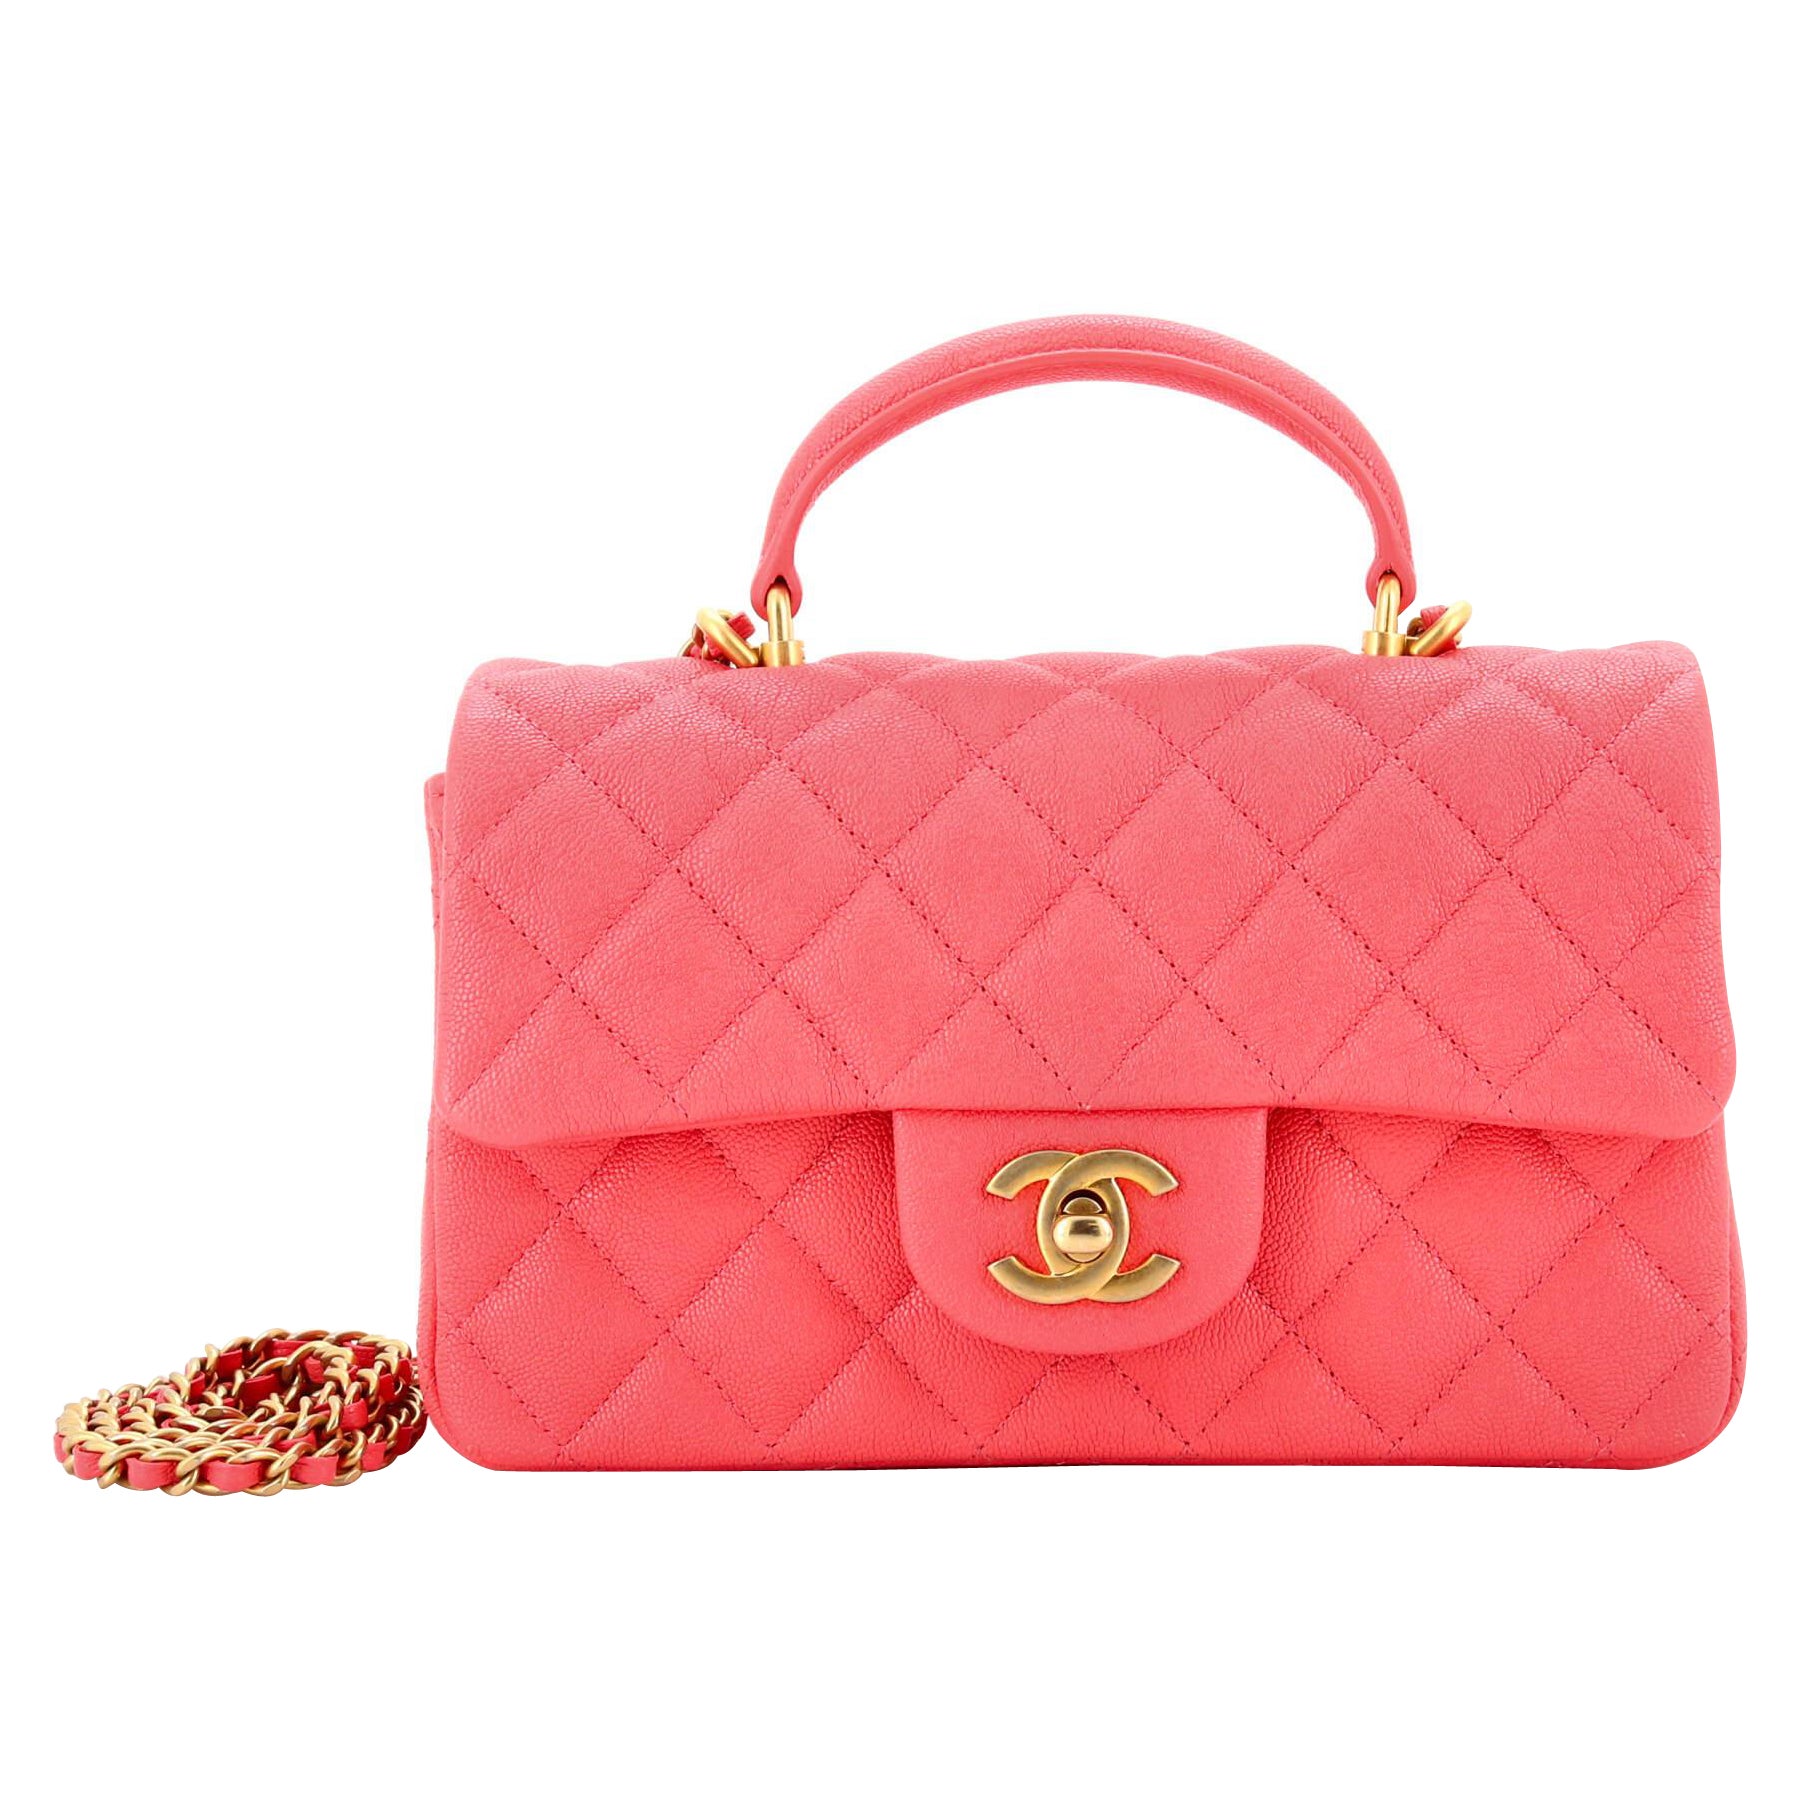 Pink Affinity Chanel - 4 For Sale on 1stDibs